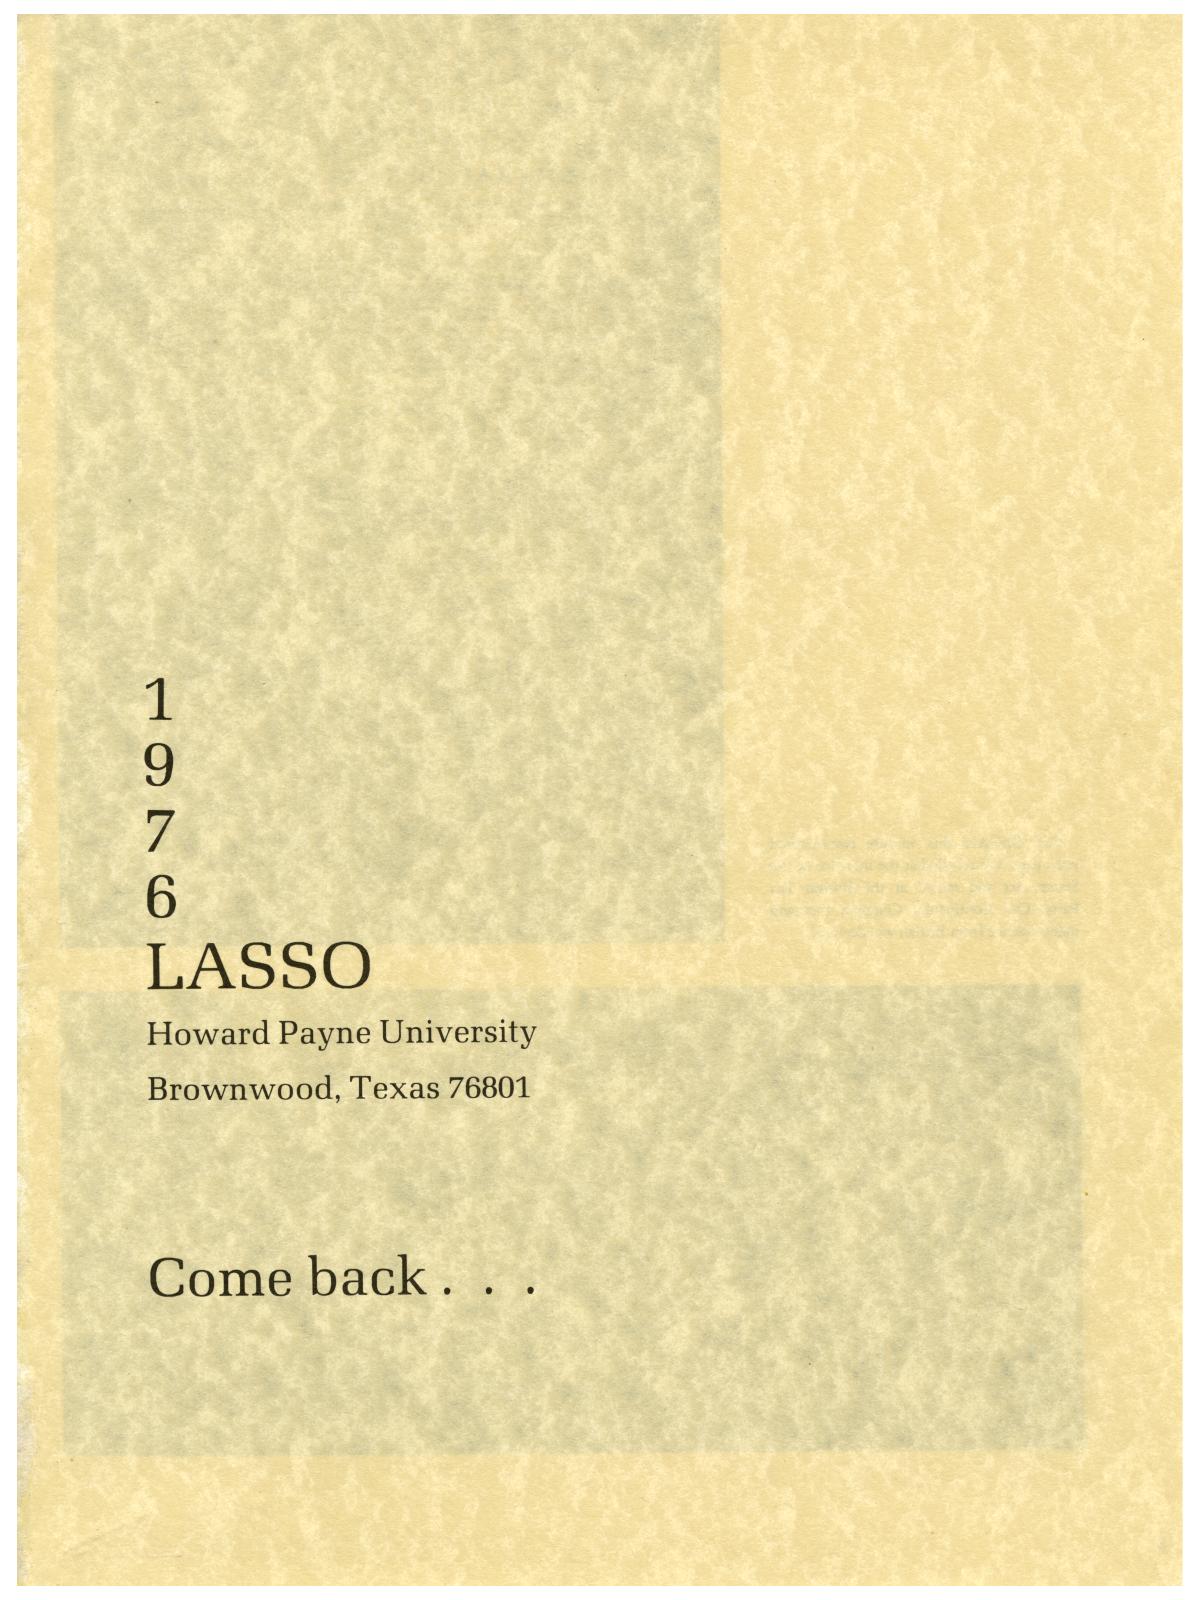 The Lasso, Yearbook of Howard Payne University, 1976
                                                
                                                    1
                                                